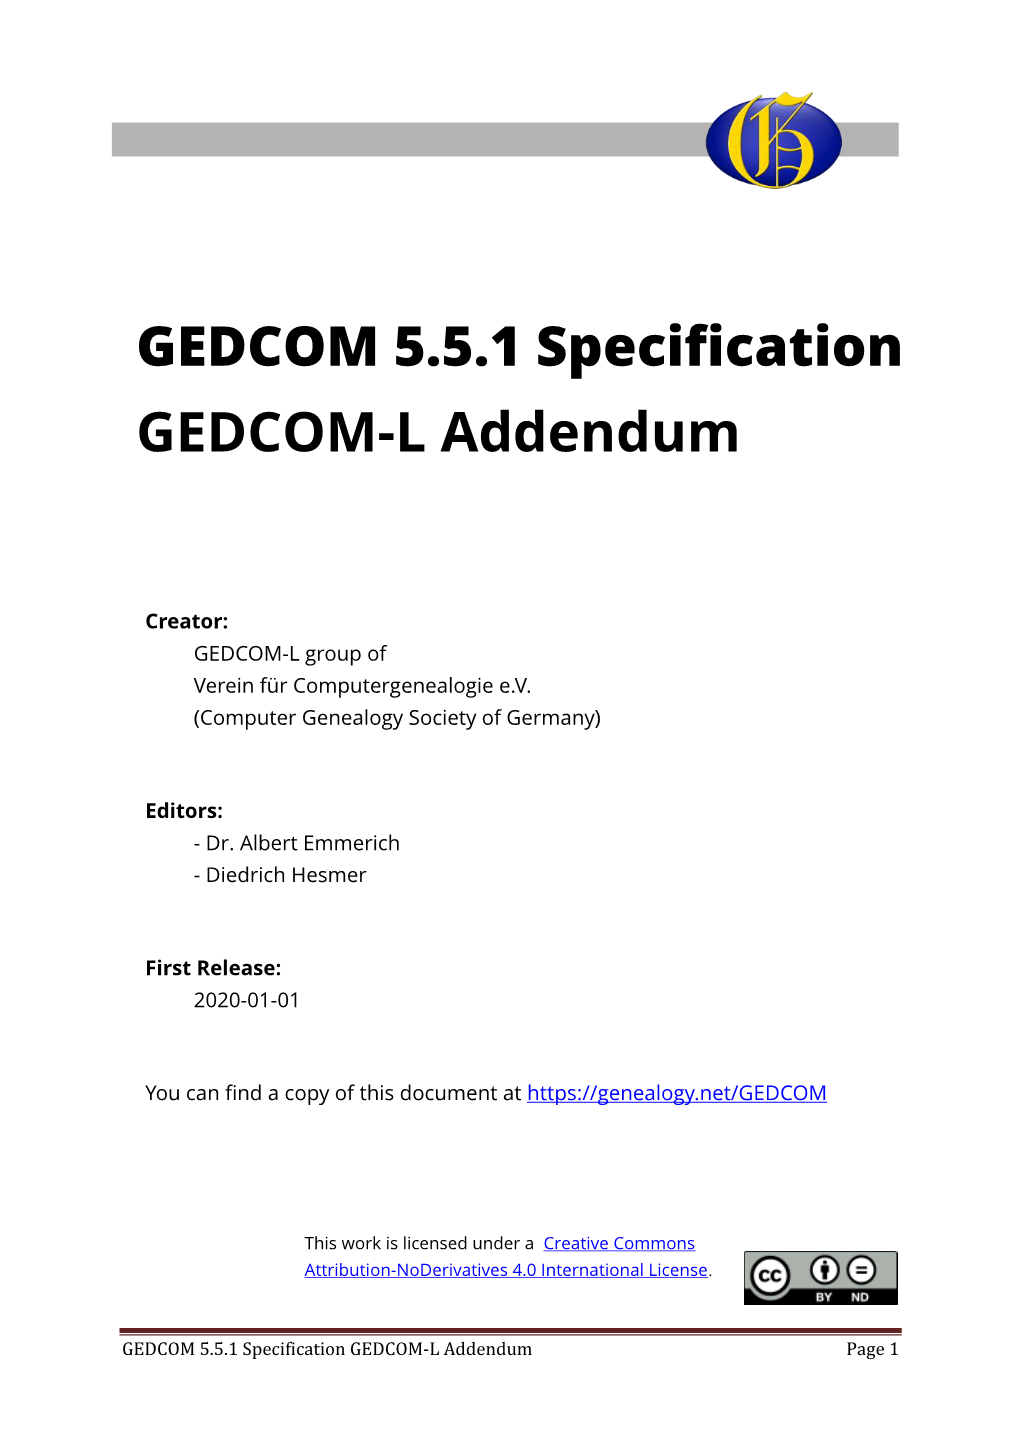 GEDCOM 5.5.1 Specification GEDCOM-L Addendum Page 1